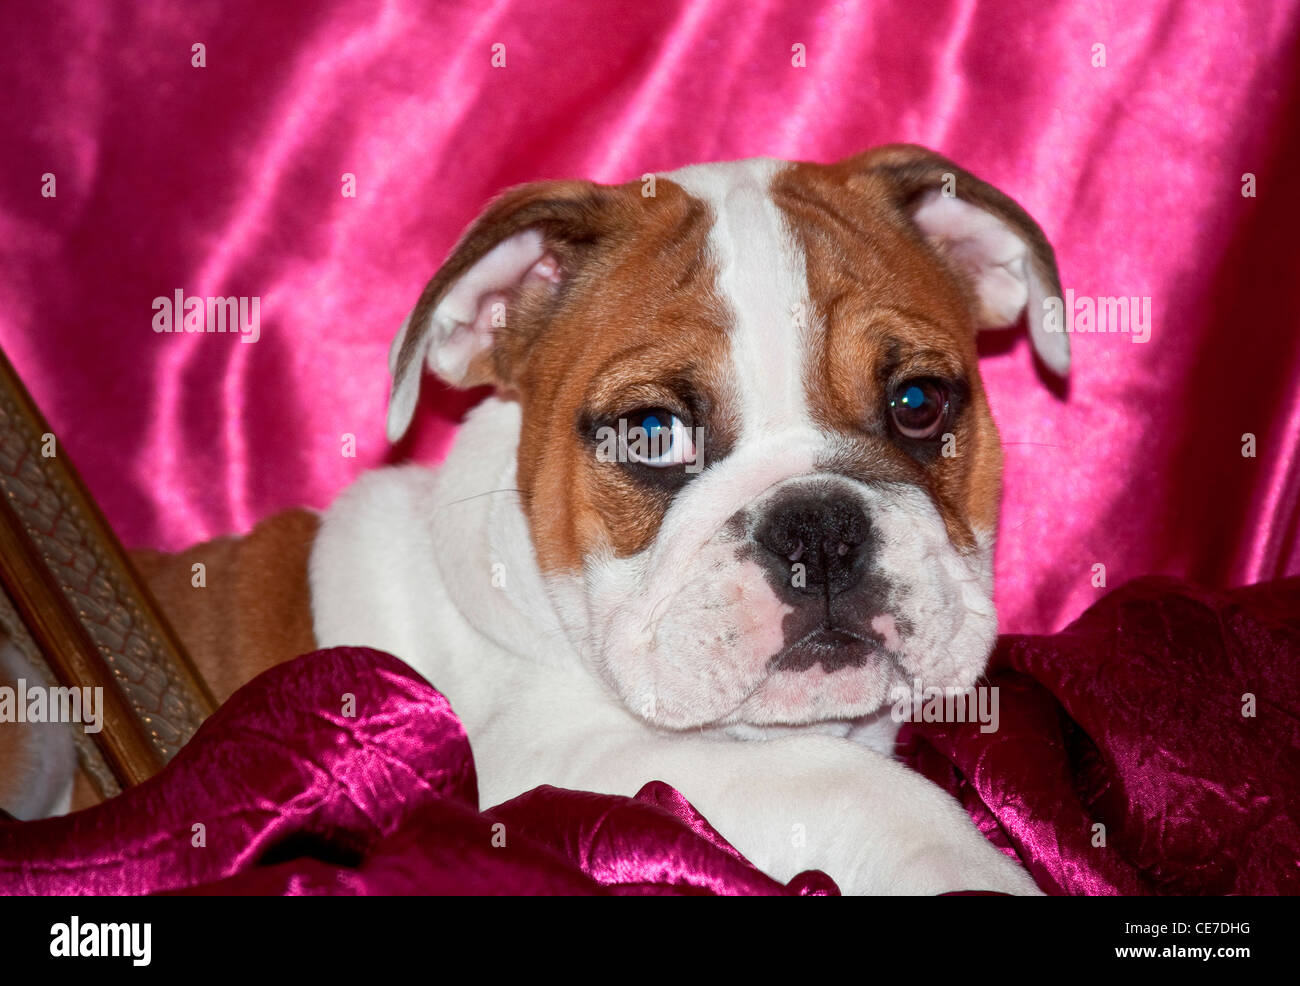 An English Bulldog puppy lying in pink satin fabric Stock Photo